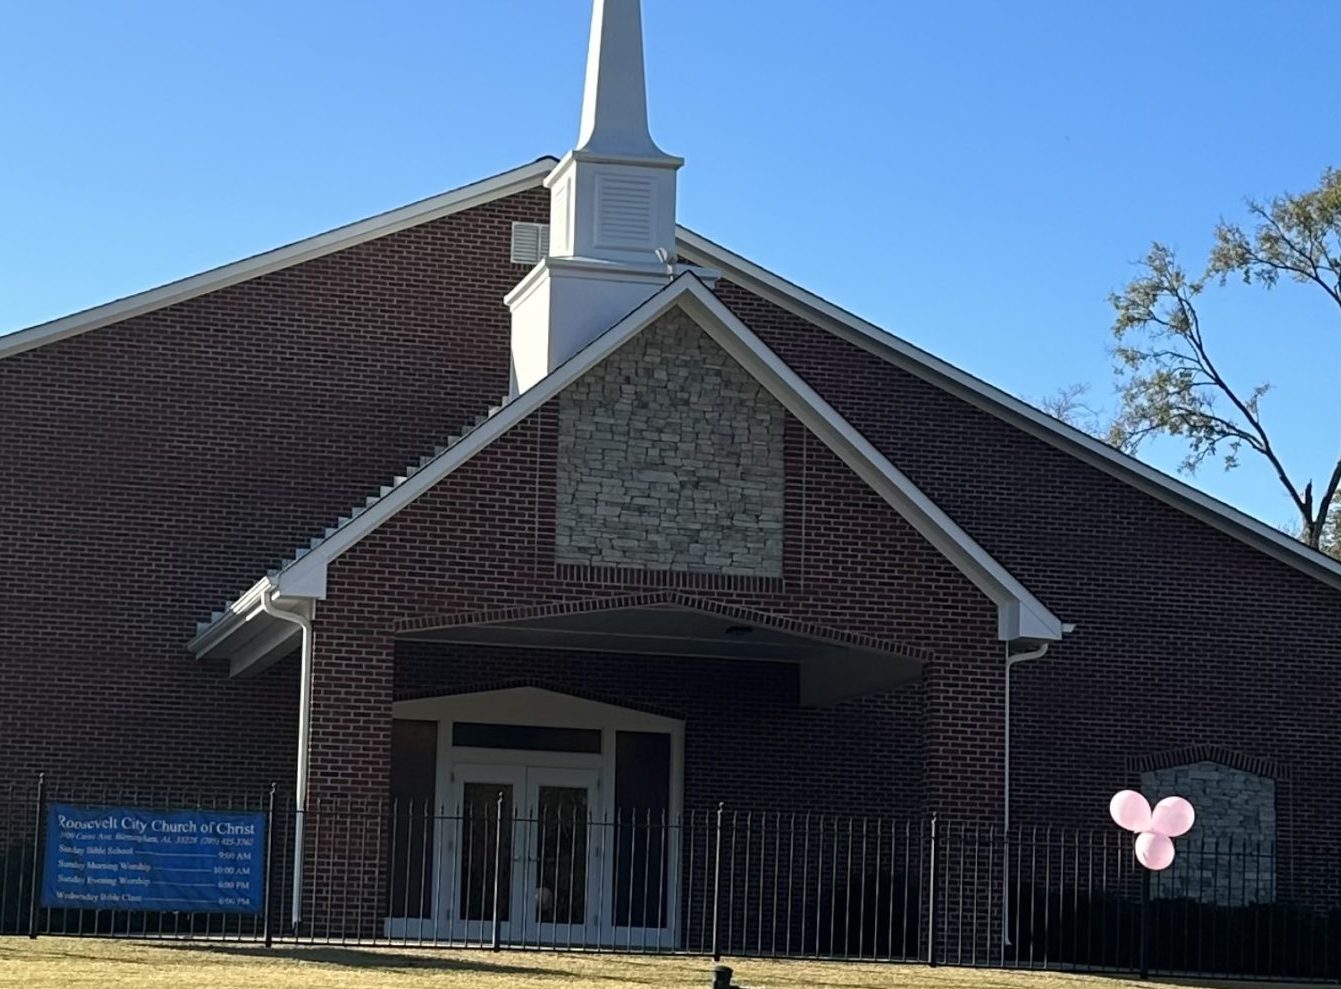 Roosevelt City Church of Christ